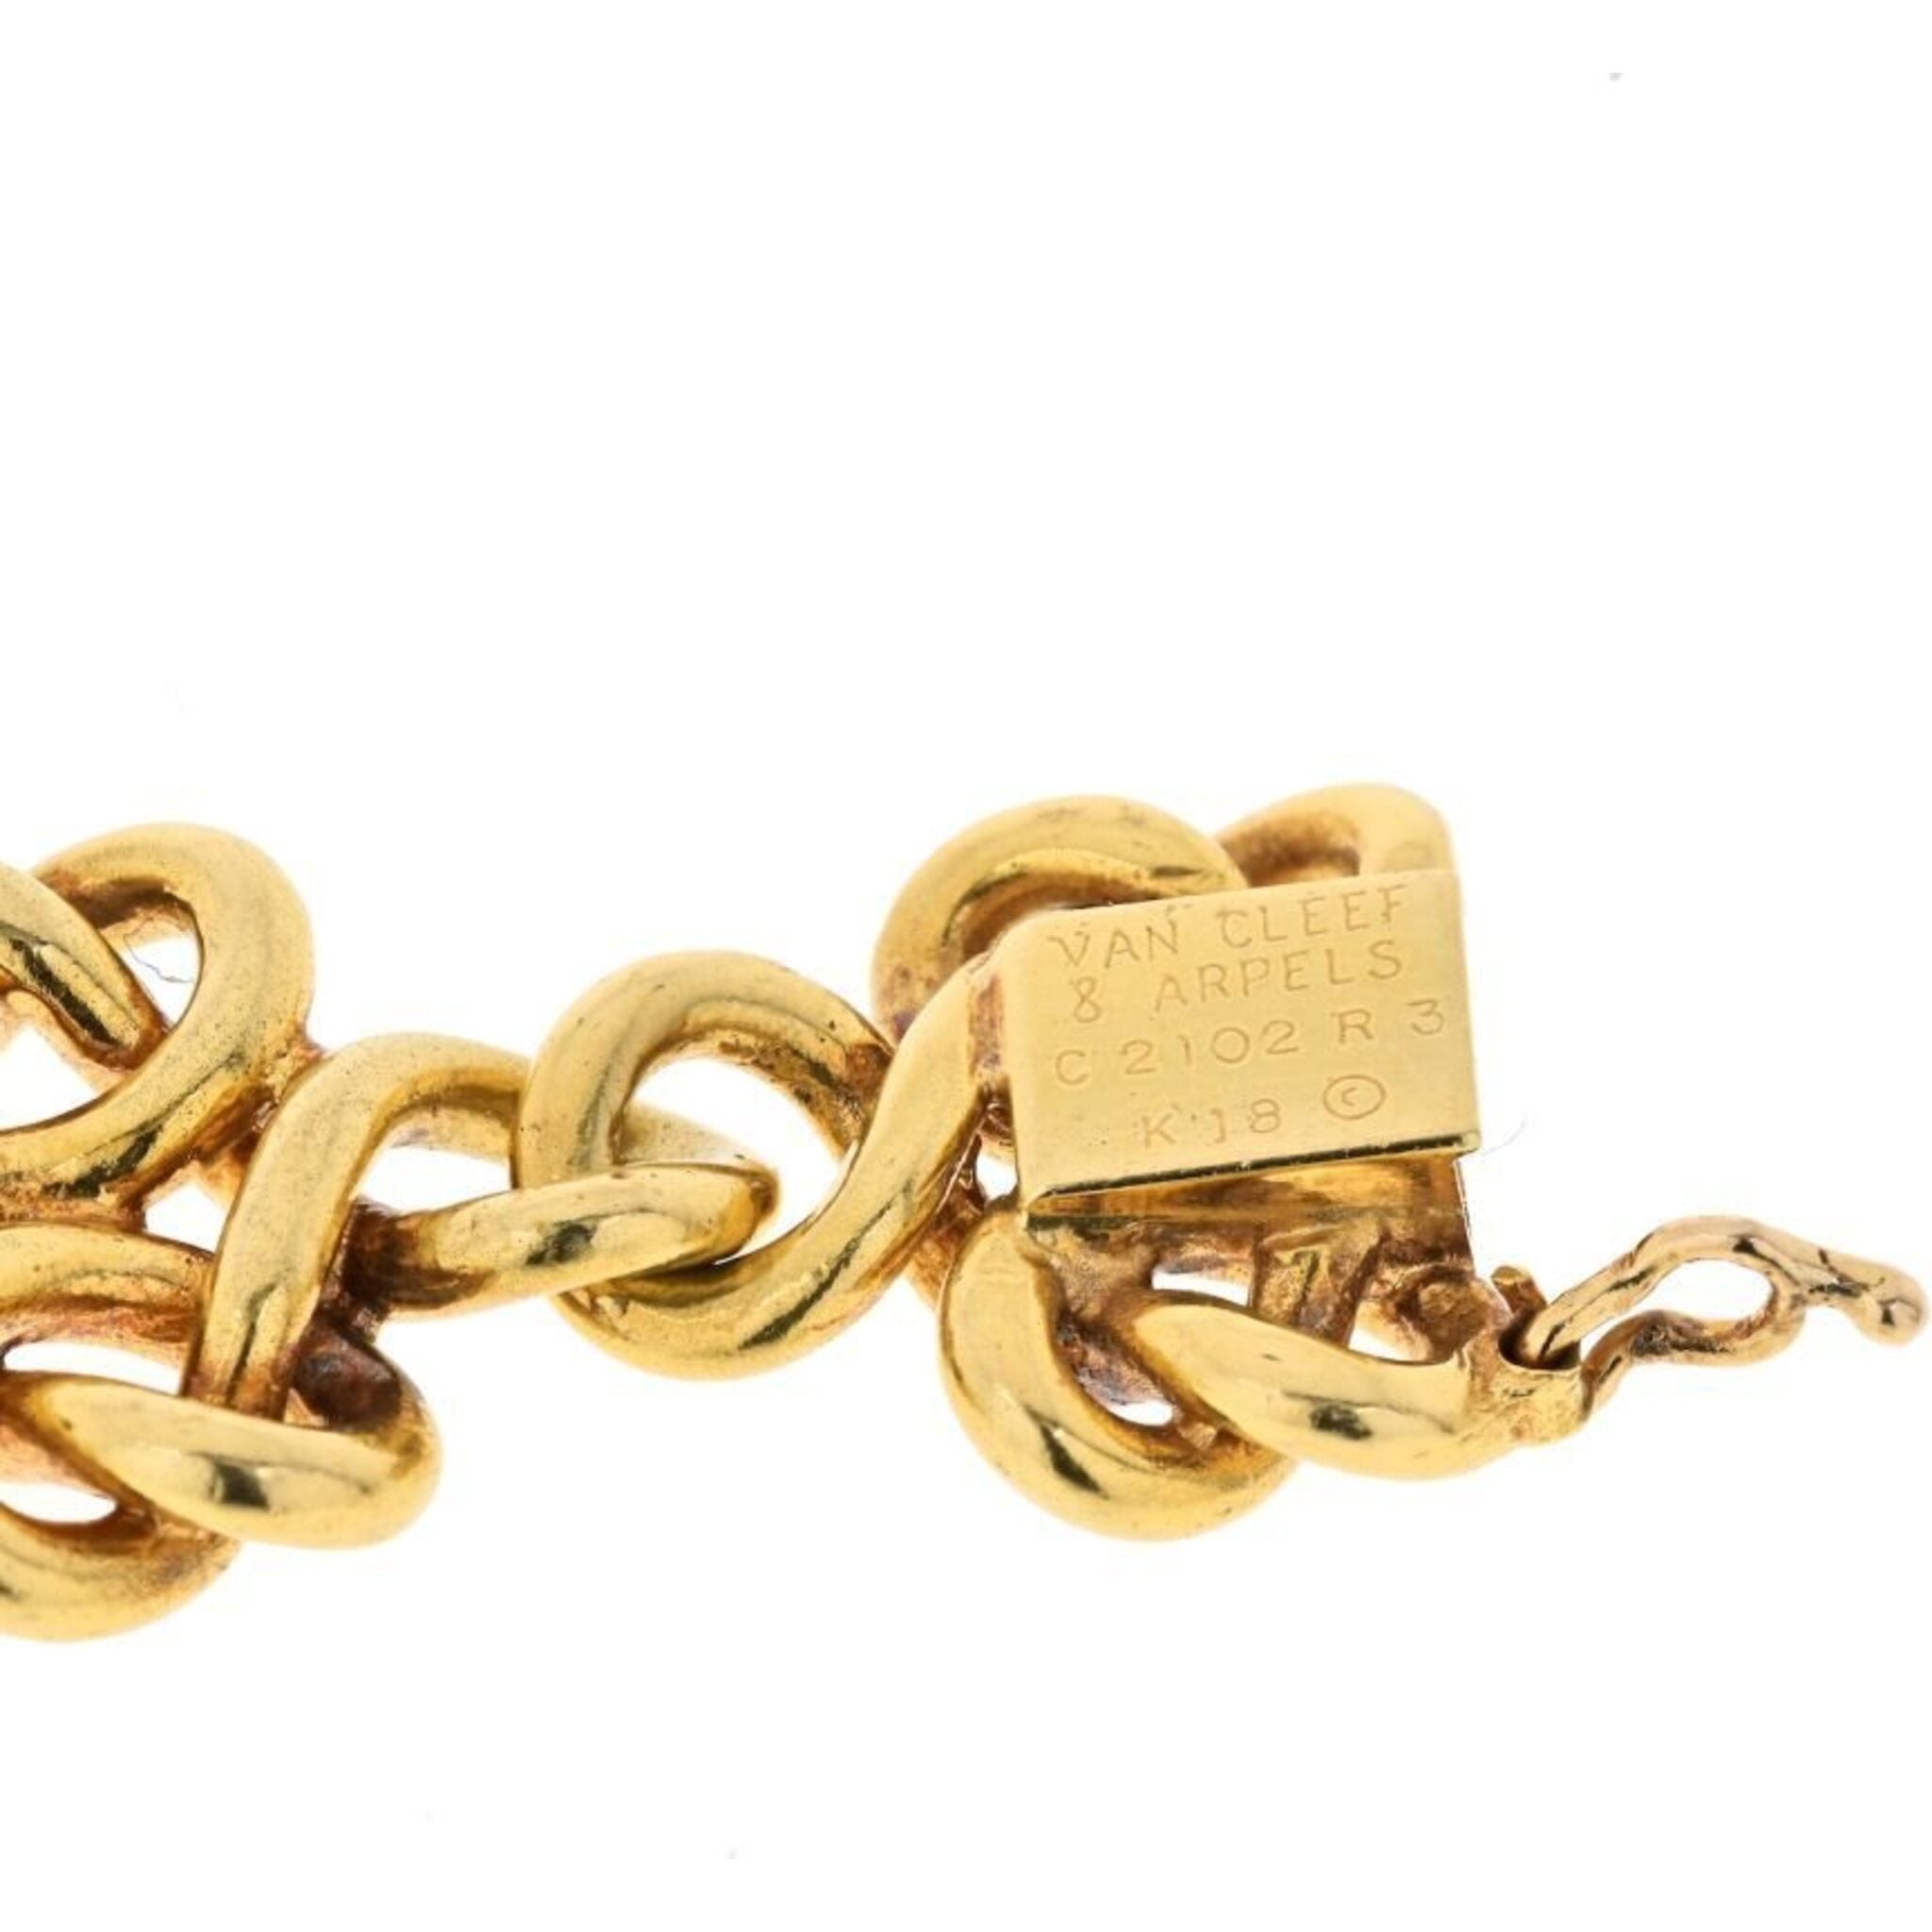 Perlée signature bracelet, large model 18K yellow gold - Van Cleef & Arpels